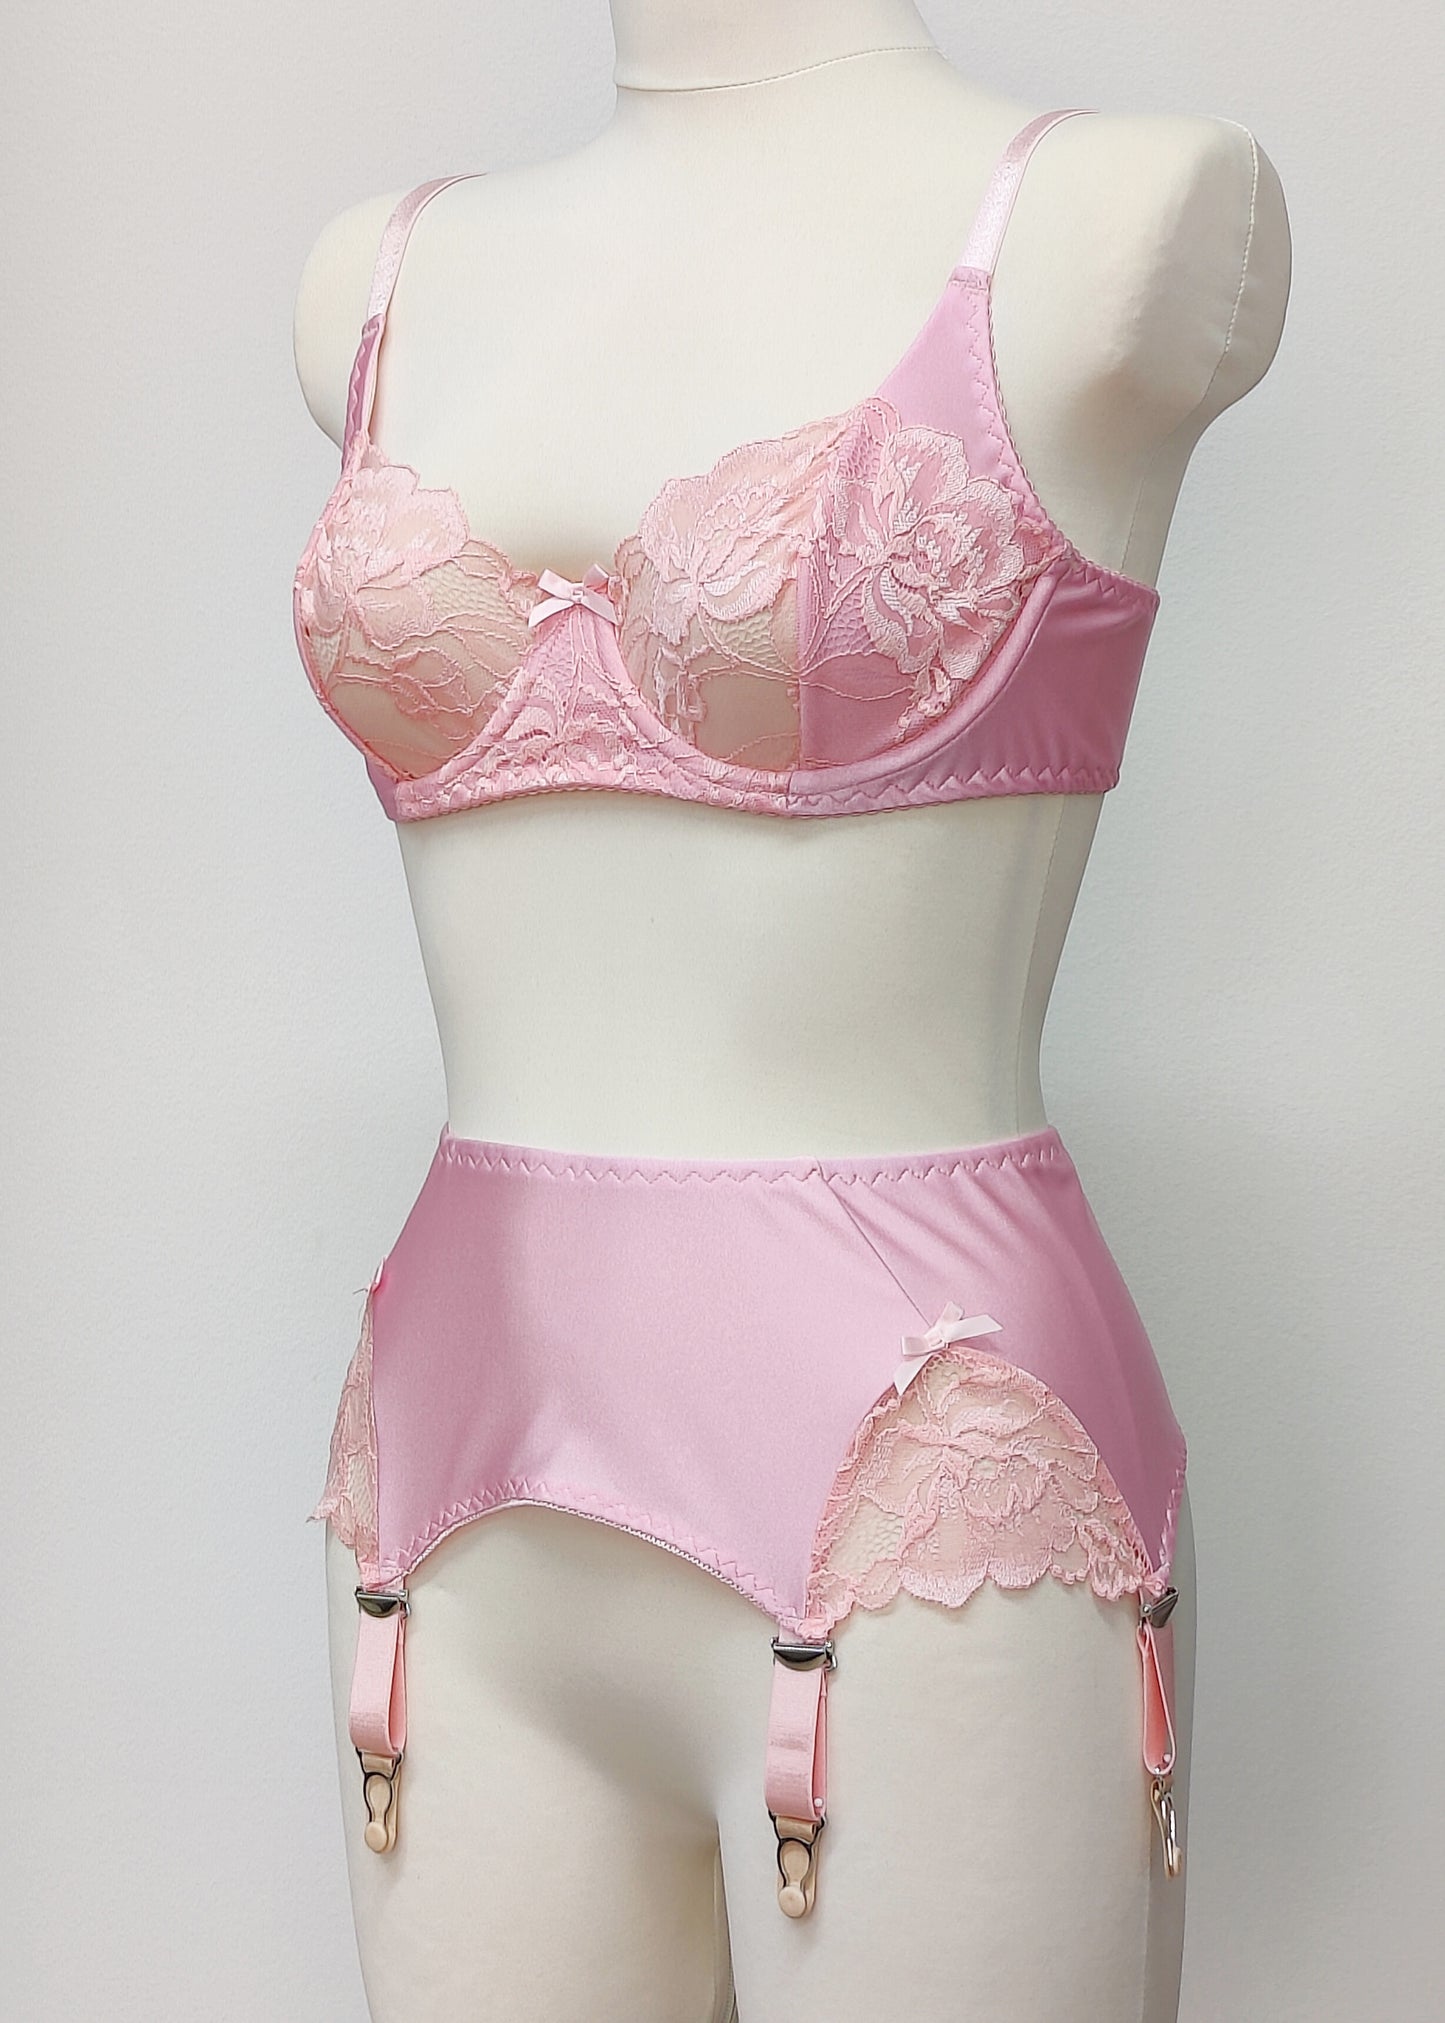 pink 6 strap garter belt with lace side panels